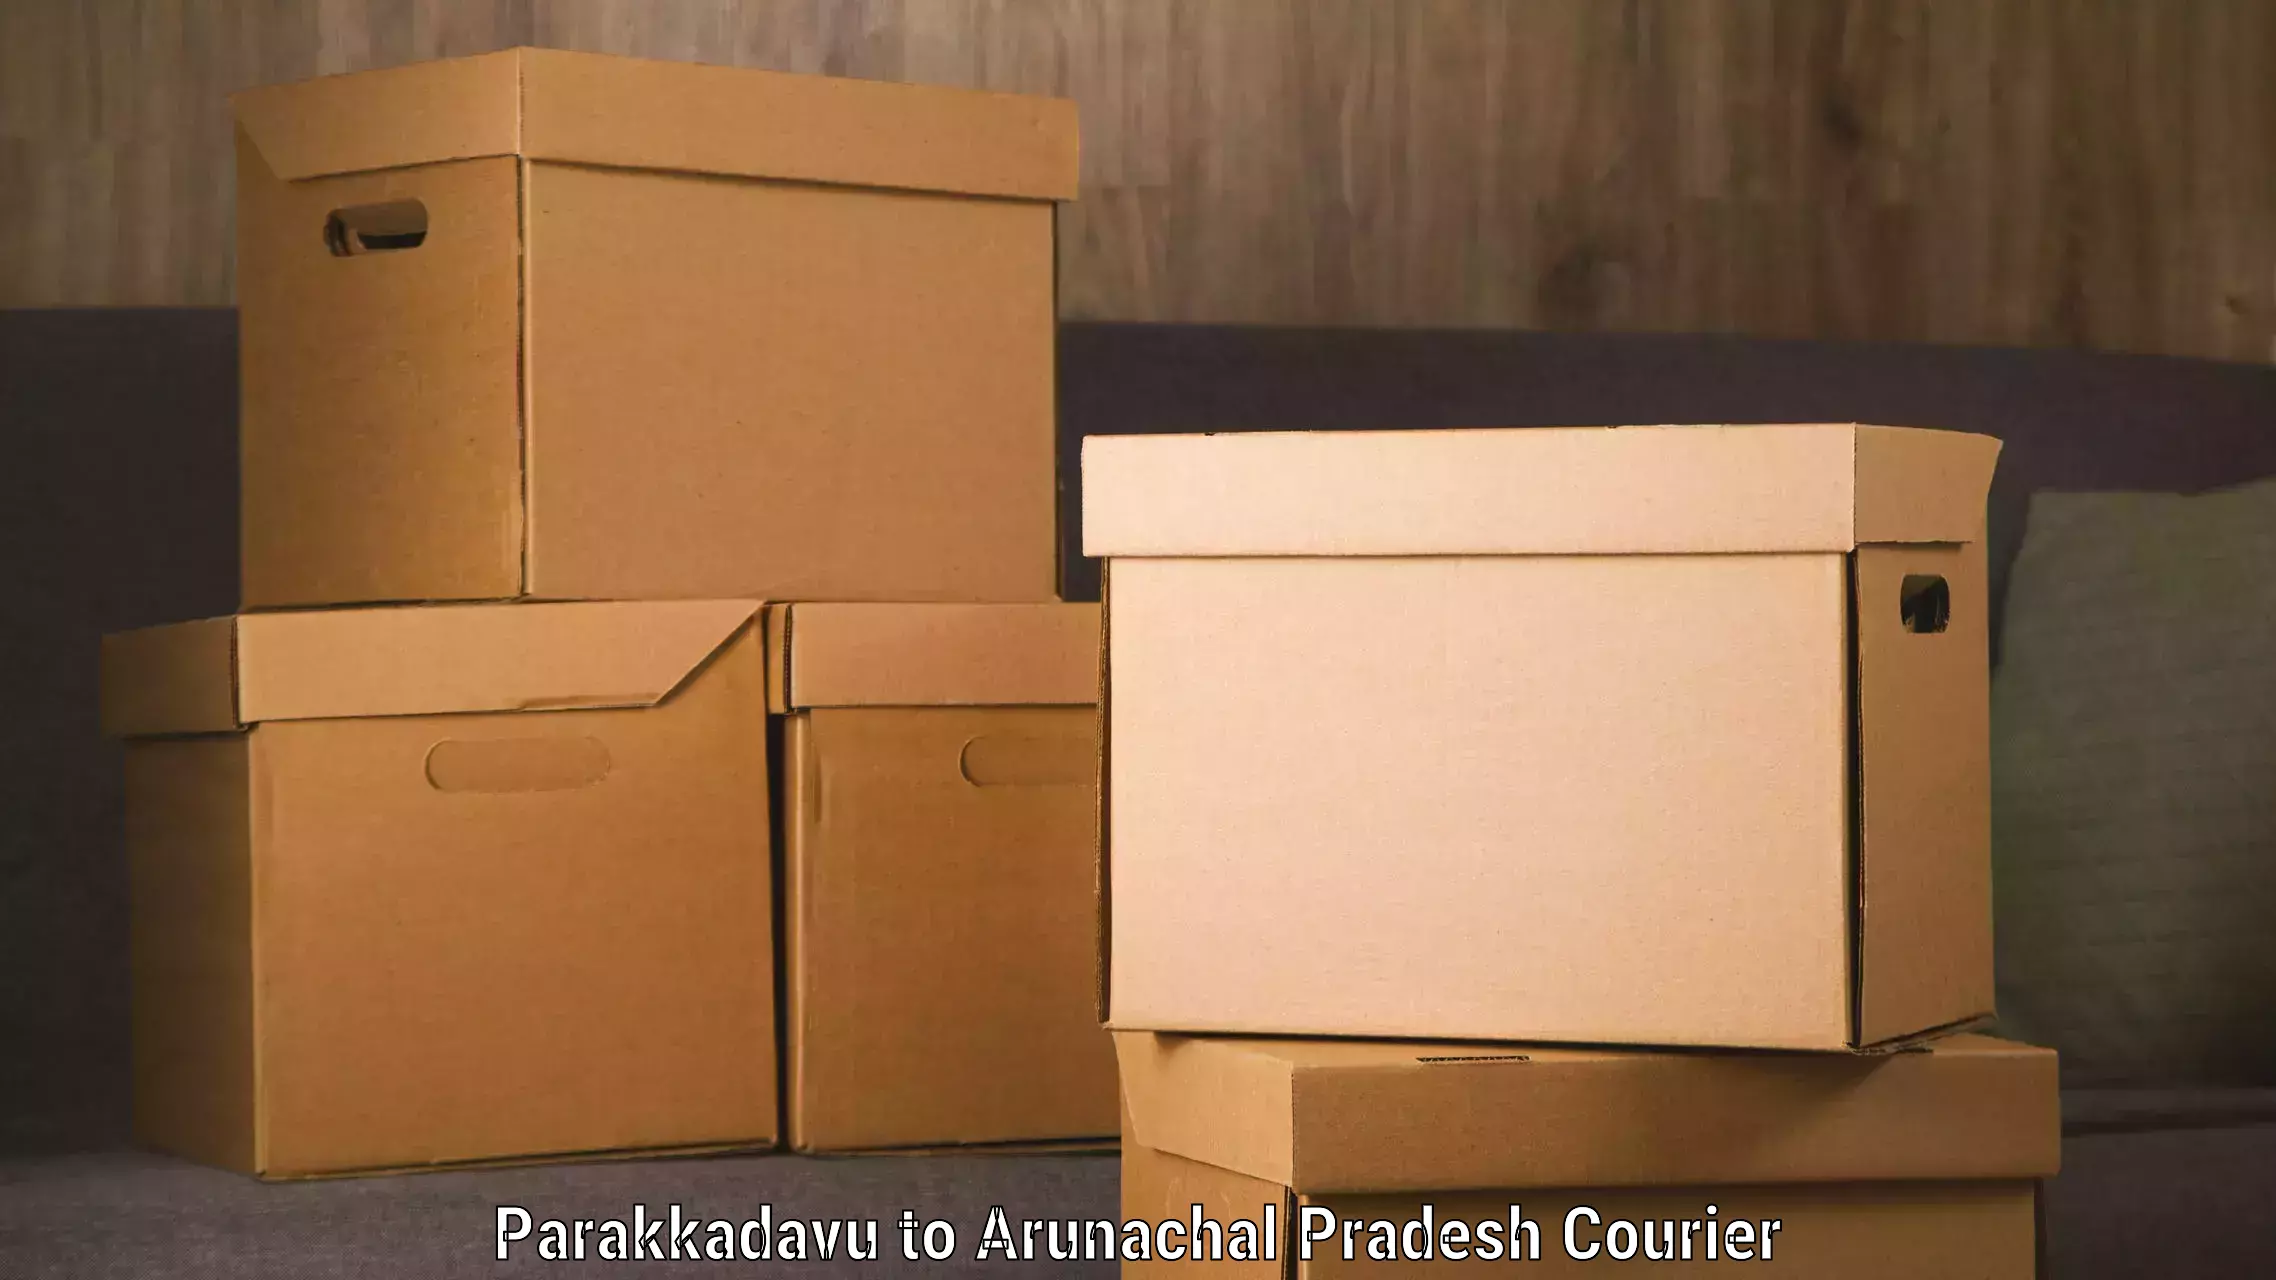 Courier service booking Parakkadavu to Arunachal Pradesh